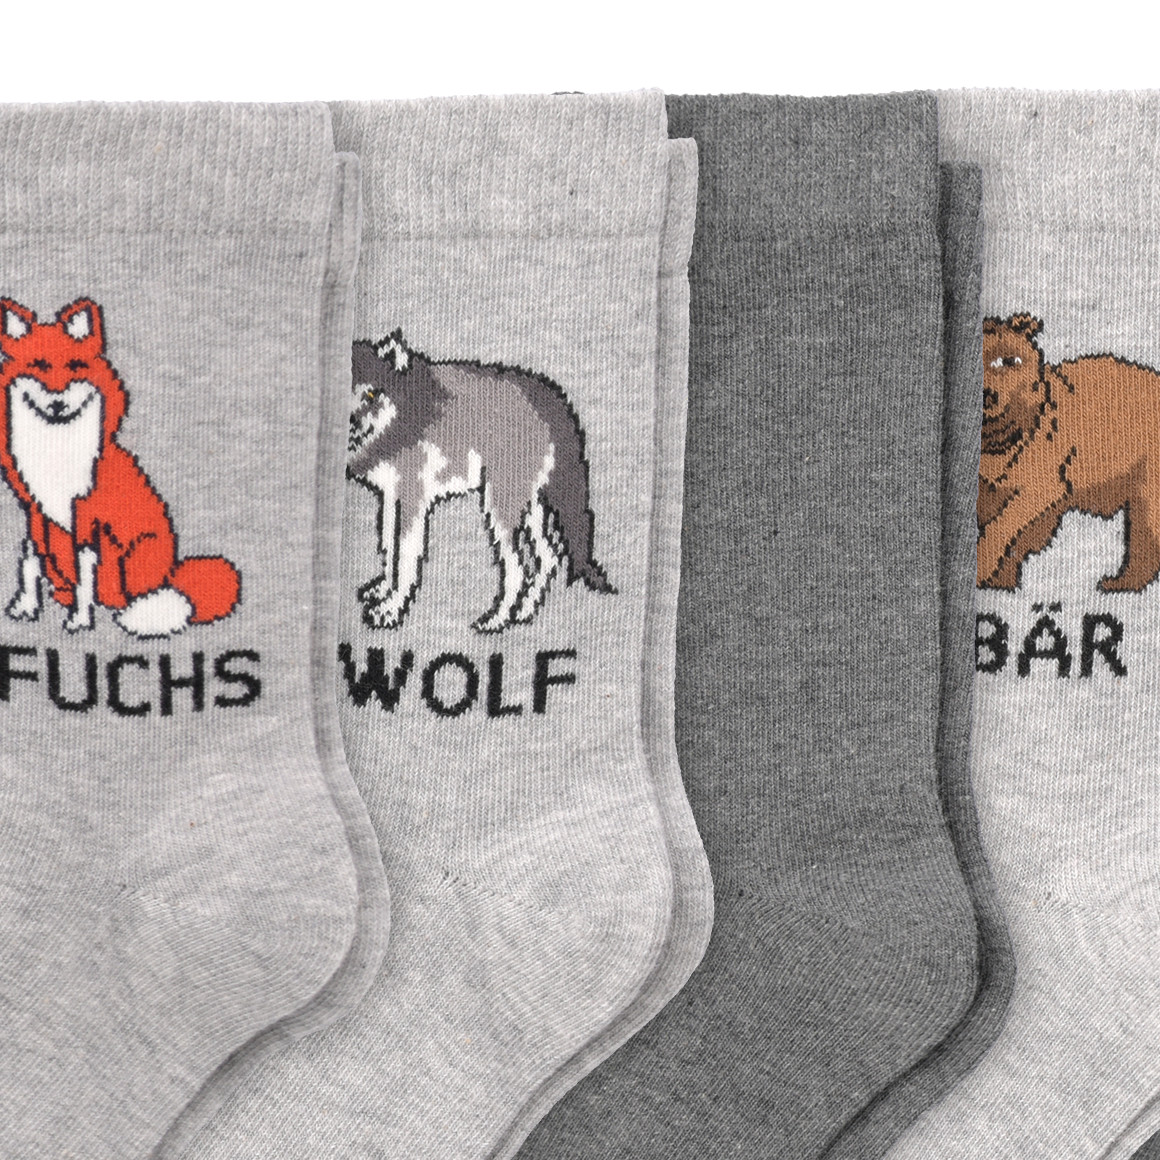 5 Paar Jungen Socken mit Tier-Motiven | Ernsting's family